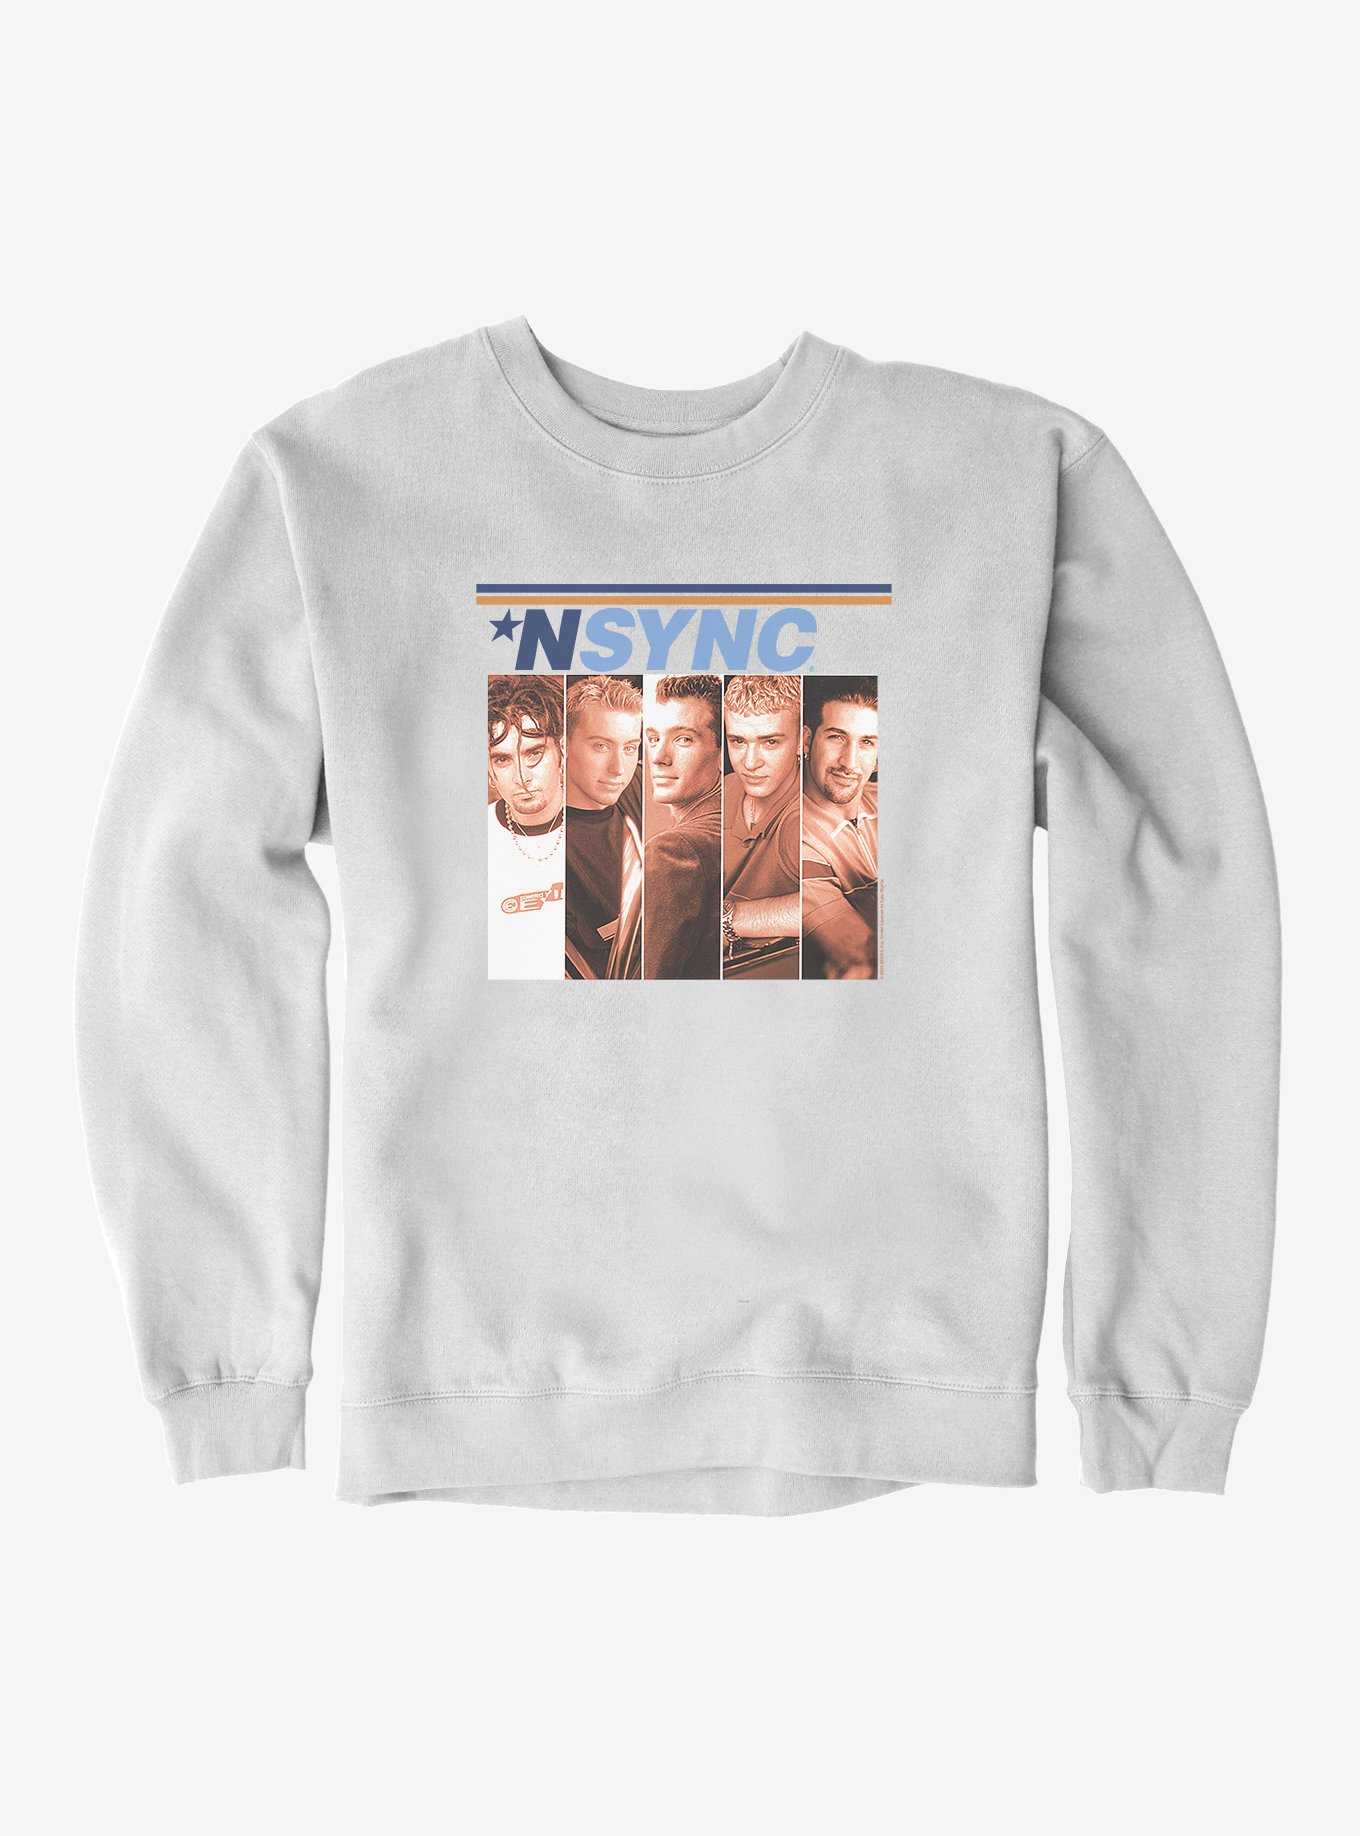 NSYNC Self Titled Album Cover Sweatshirt, , hi-res